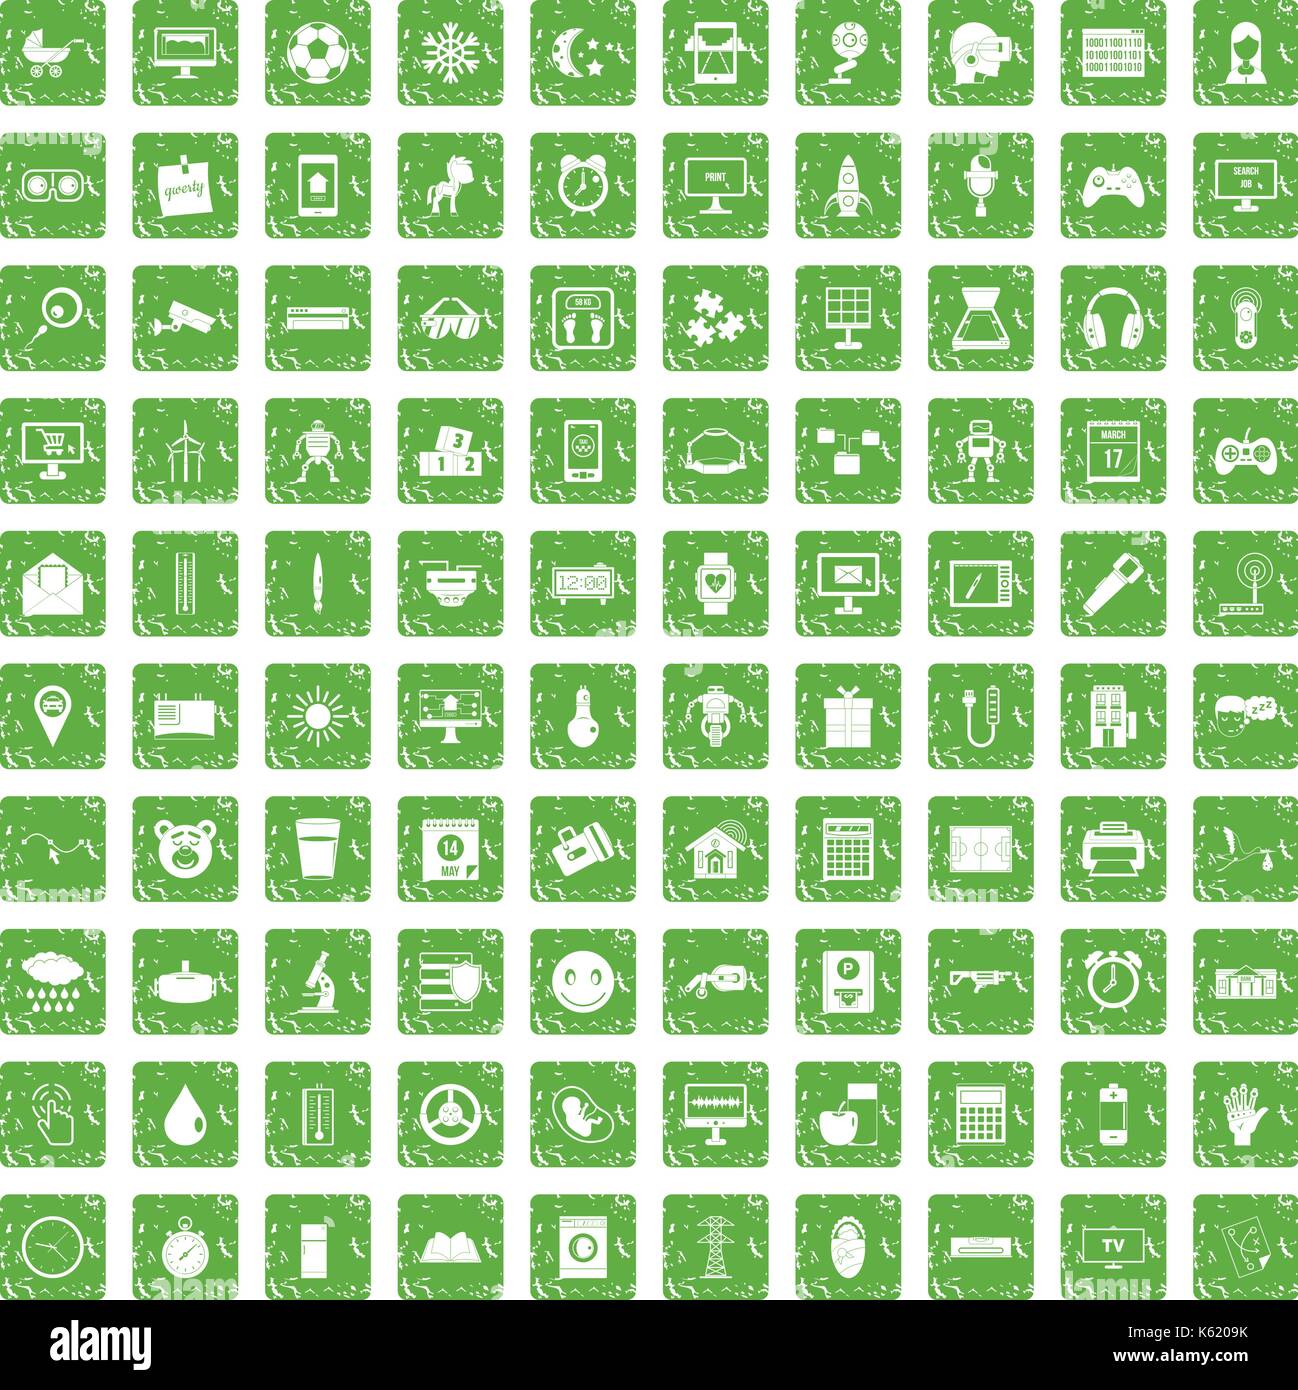 100 App Icons Set Grunge Green Stock Vector Image & Art - Alamy